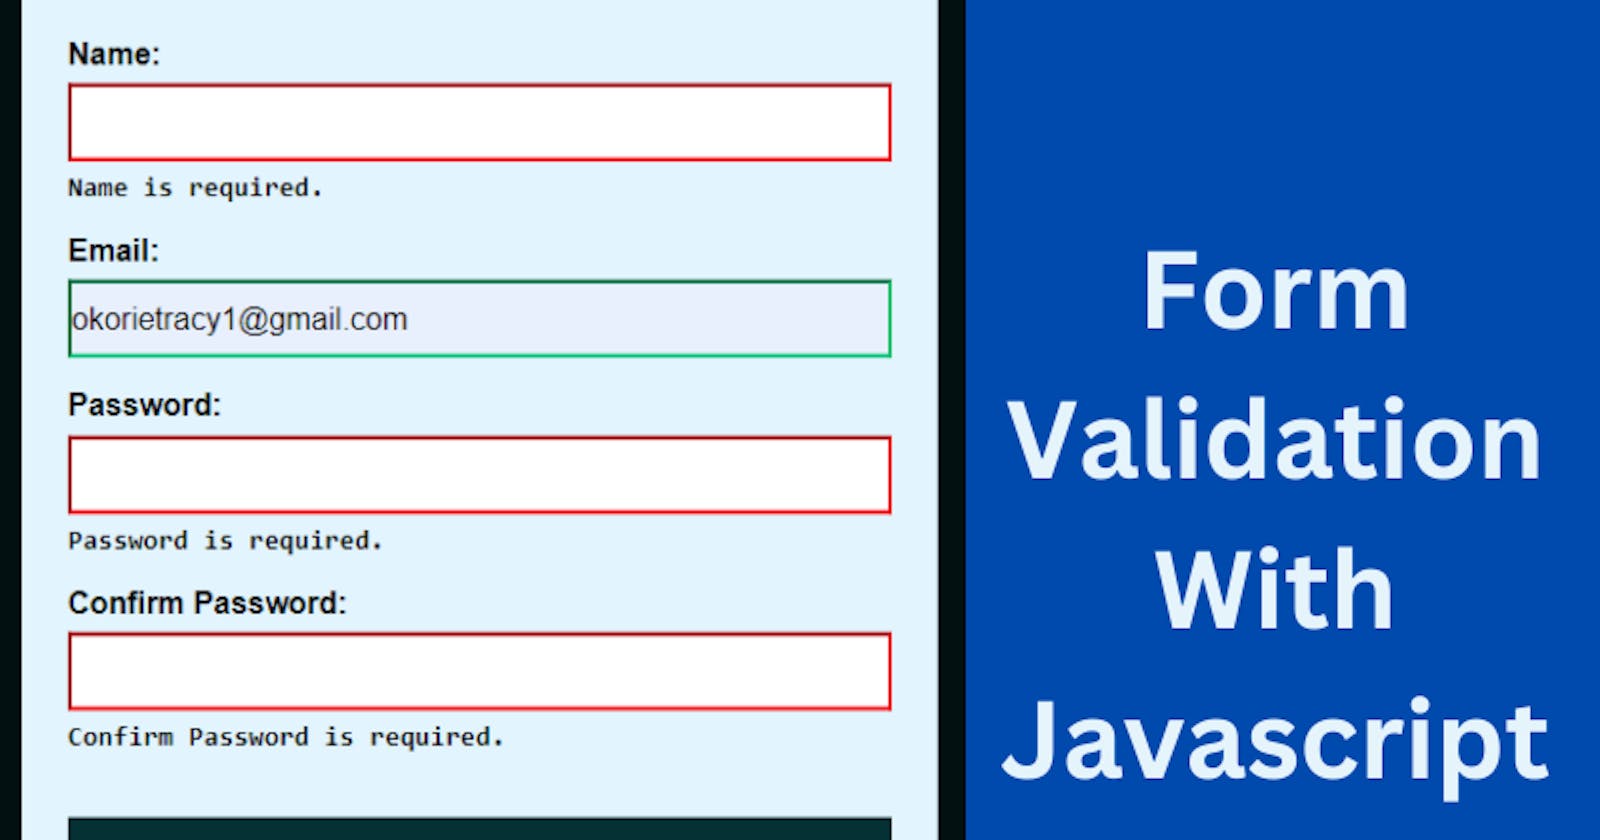 Form Validation with JavaScript